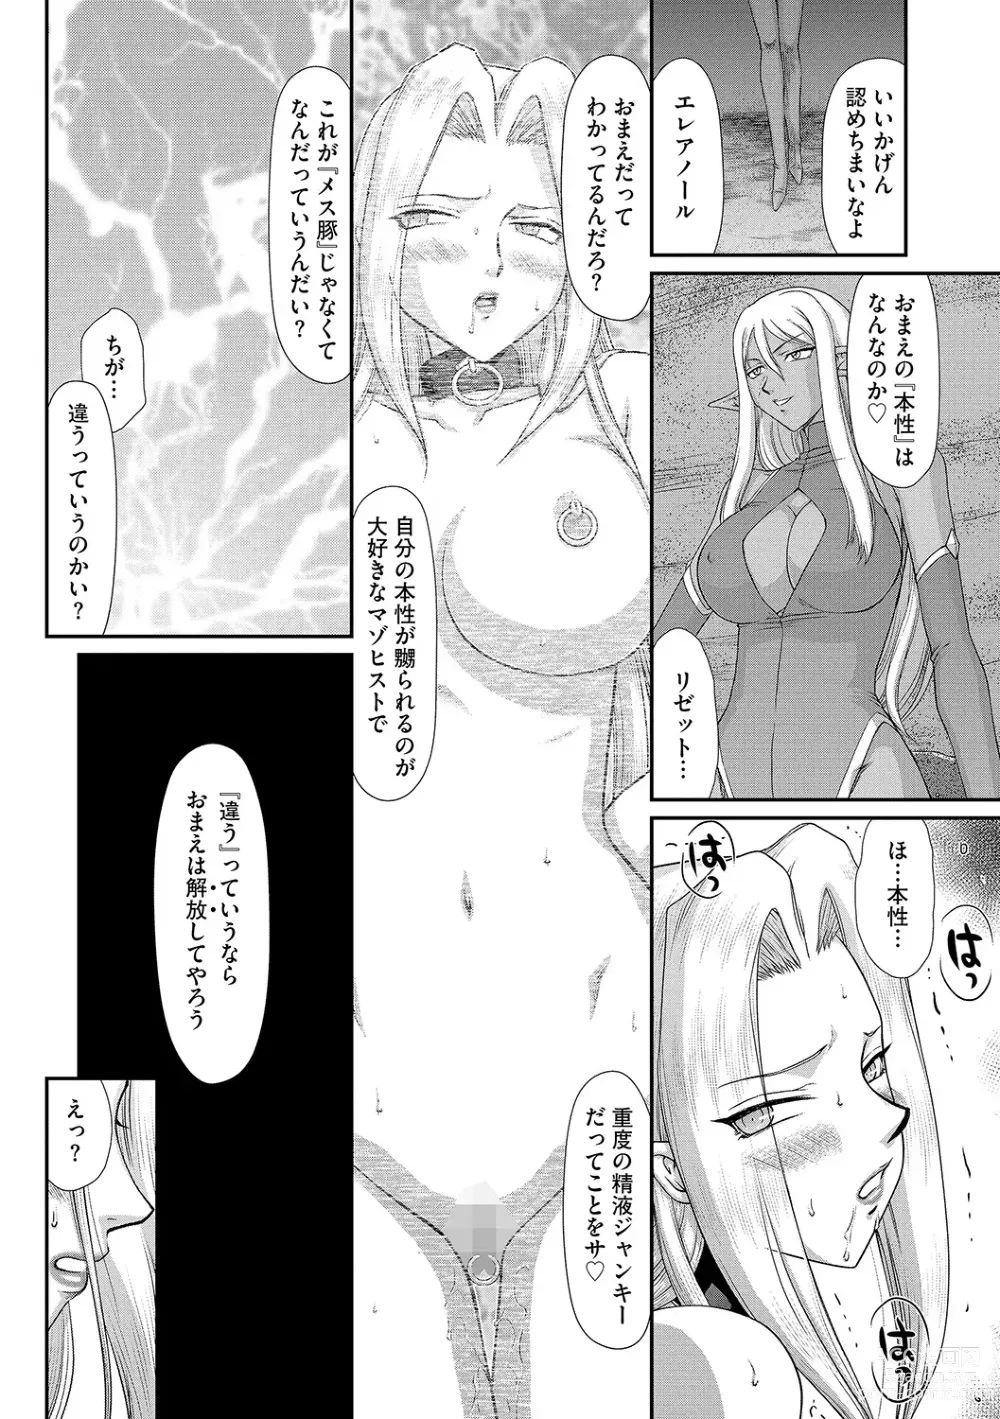 Page 174 of manga Hakudaku Senki Eleanor